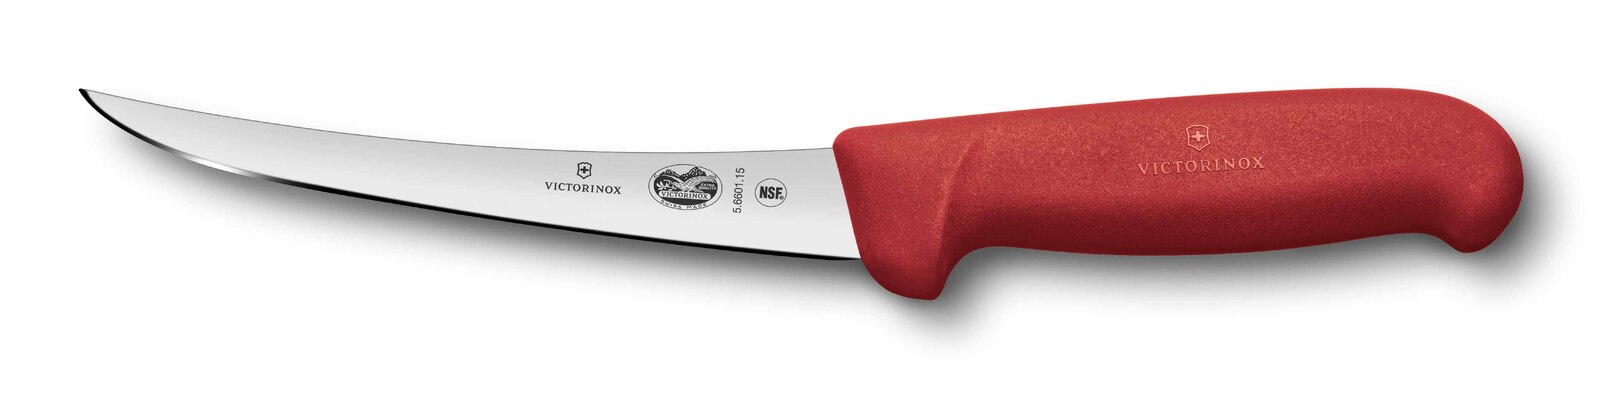 Victorinox Fibrox Curved Narrow Blade Boning Knife 15cm Red